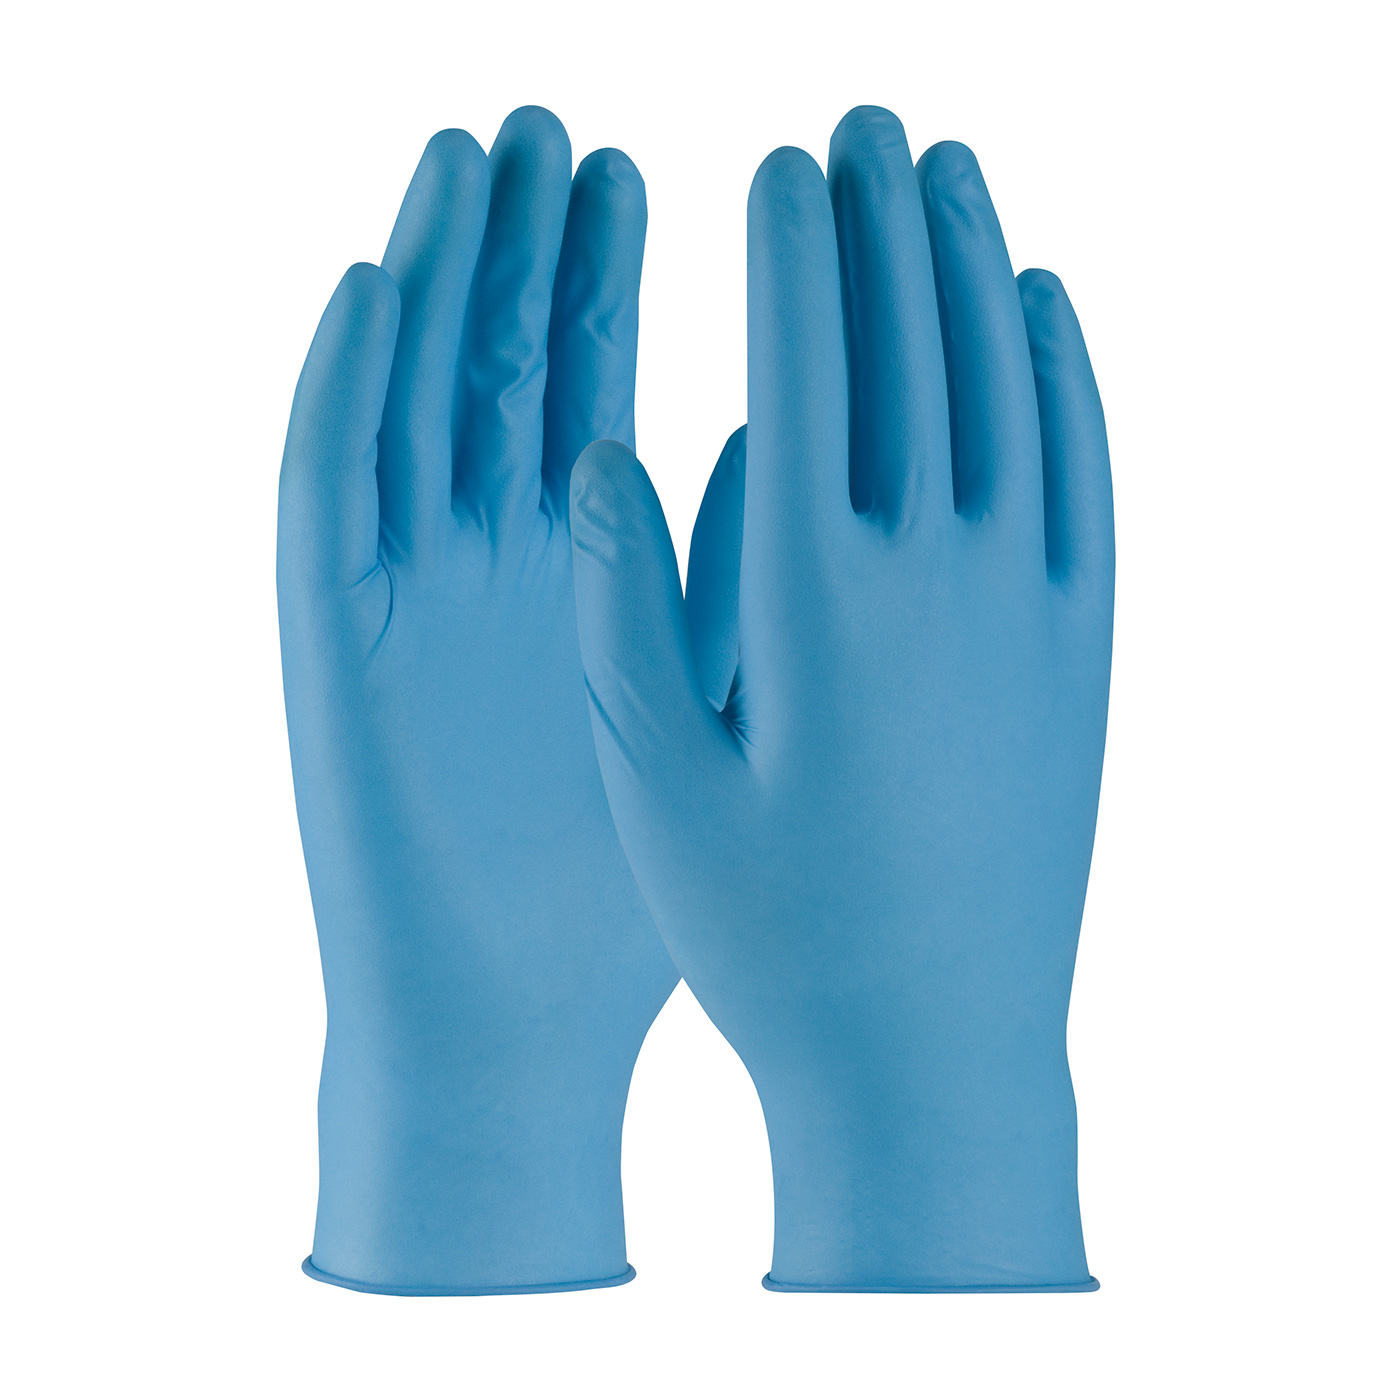 8 MIL POWDER FREE BLUE NITRILE 50/BX - Disposable Gloves